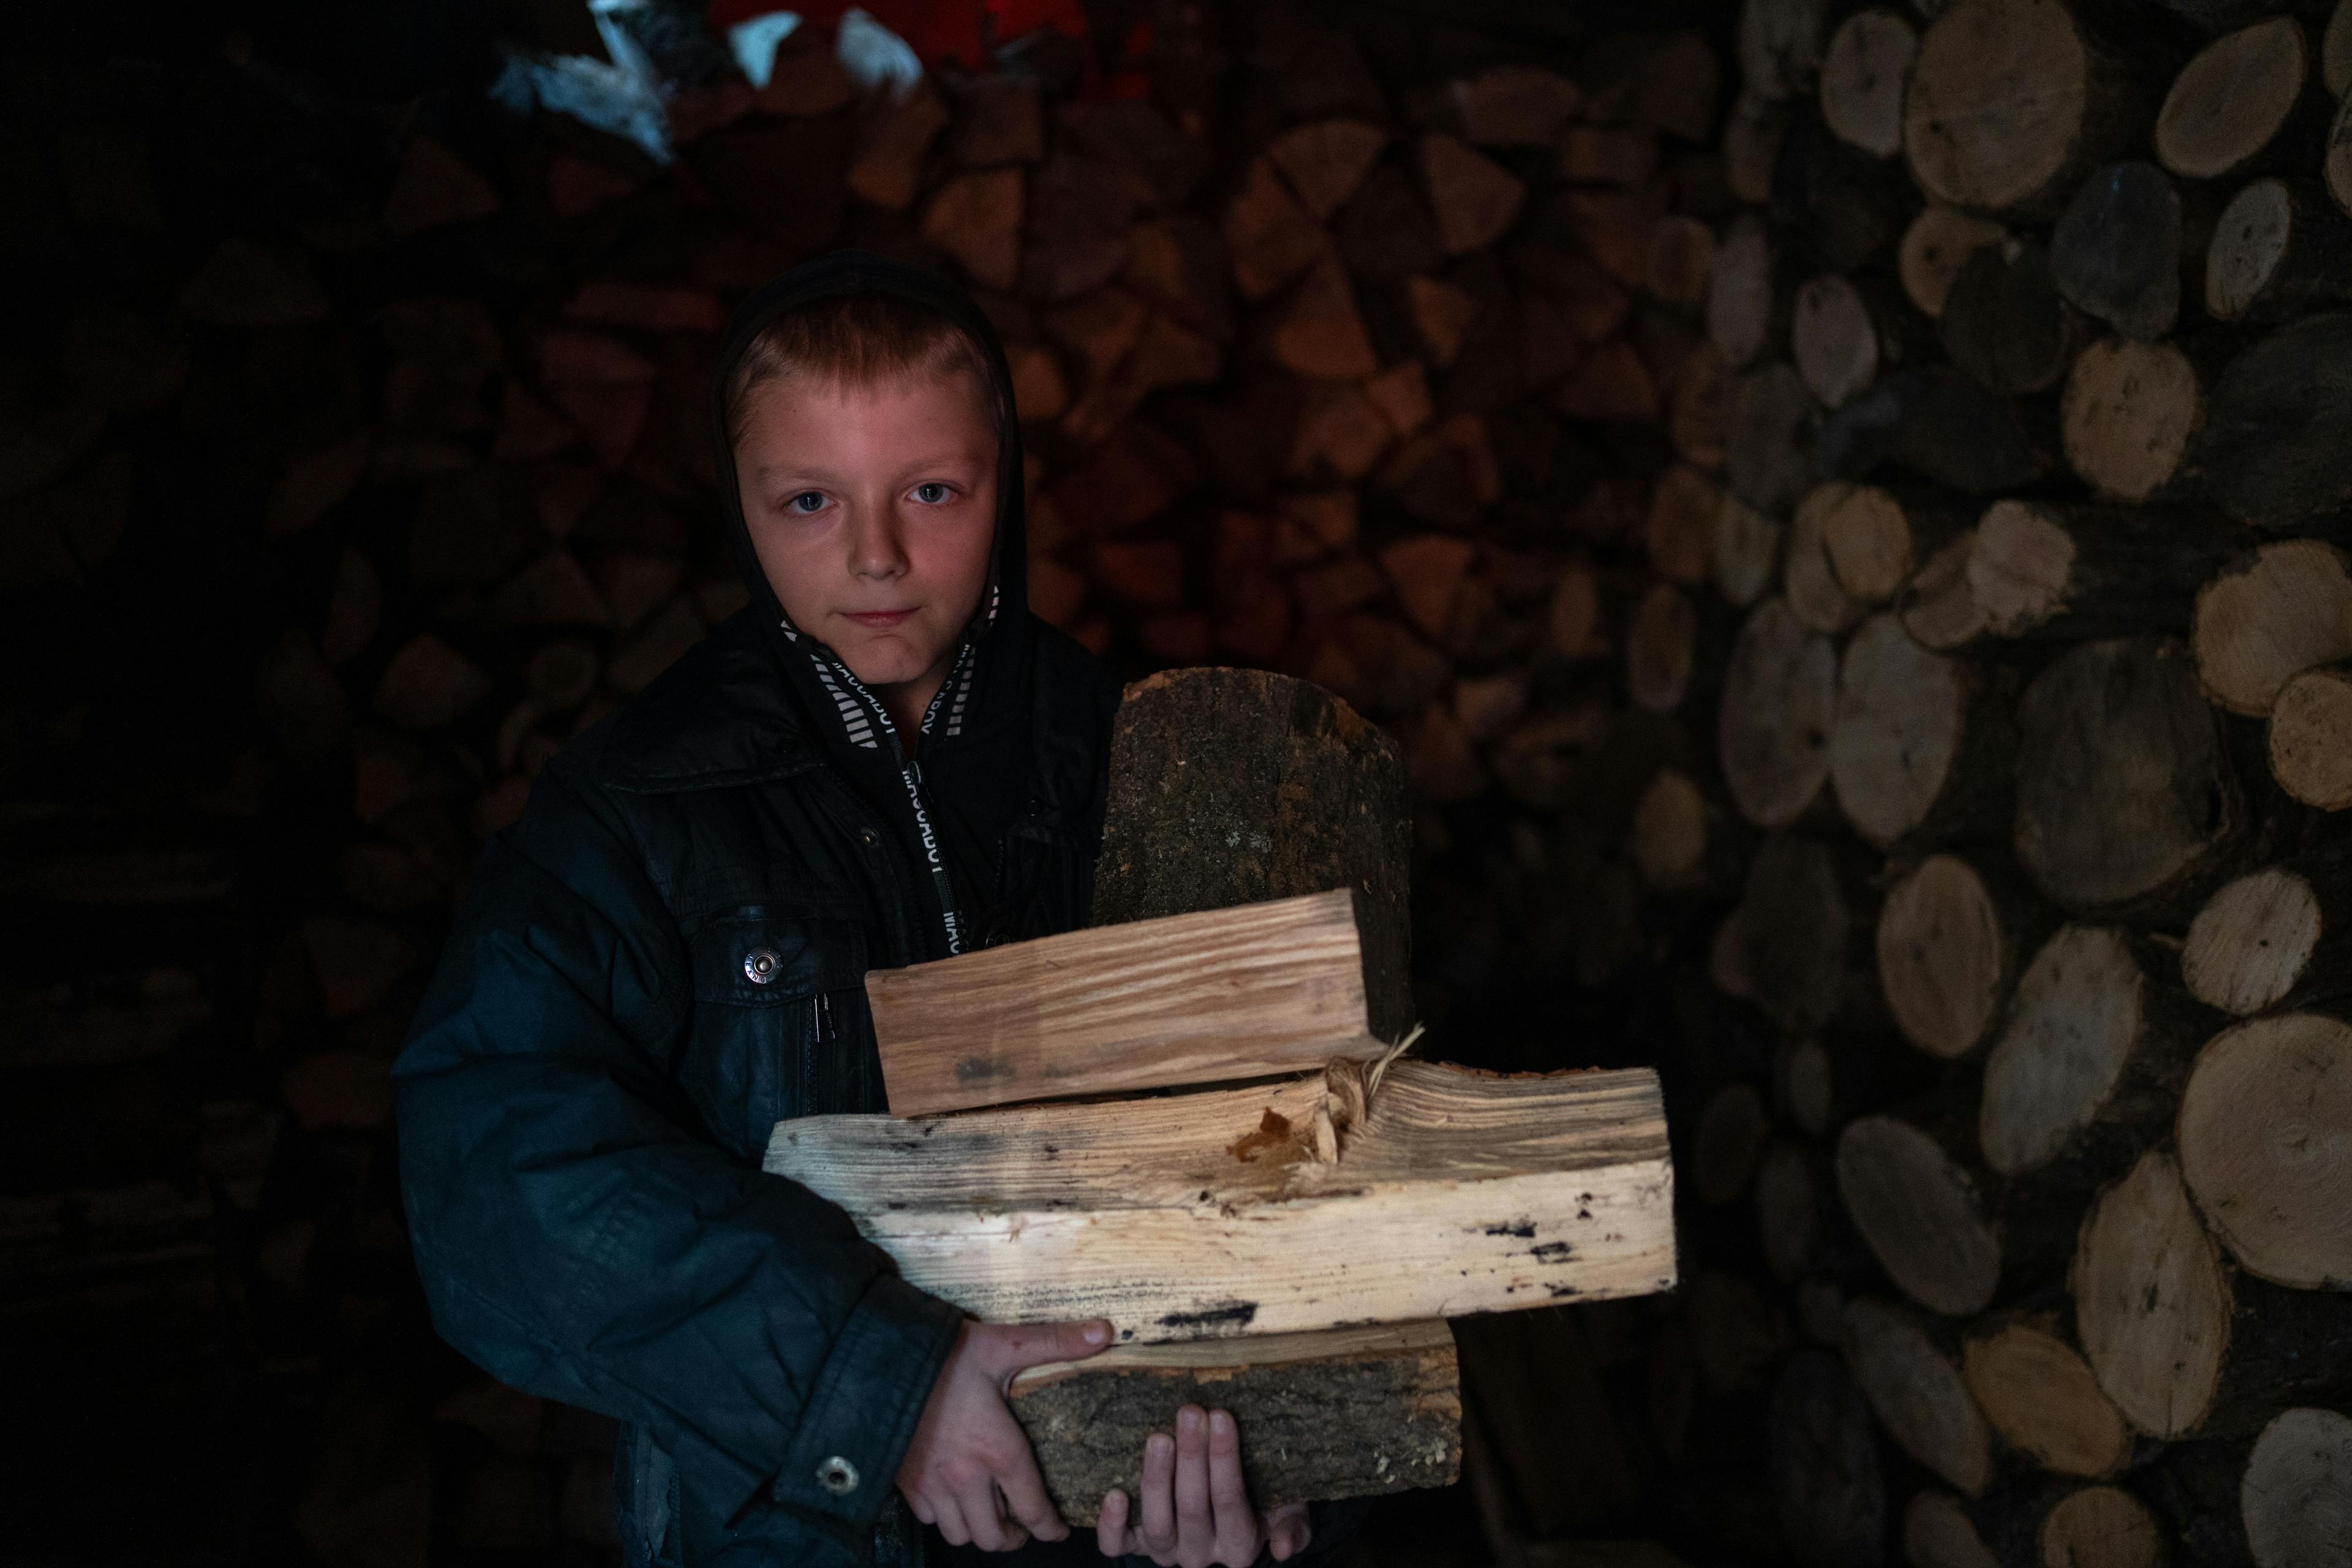 Ten-year-old Bohdan is holding firewood, Izyum, Ukraine.